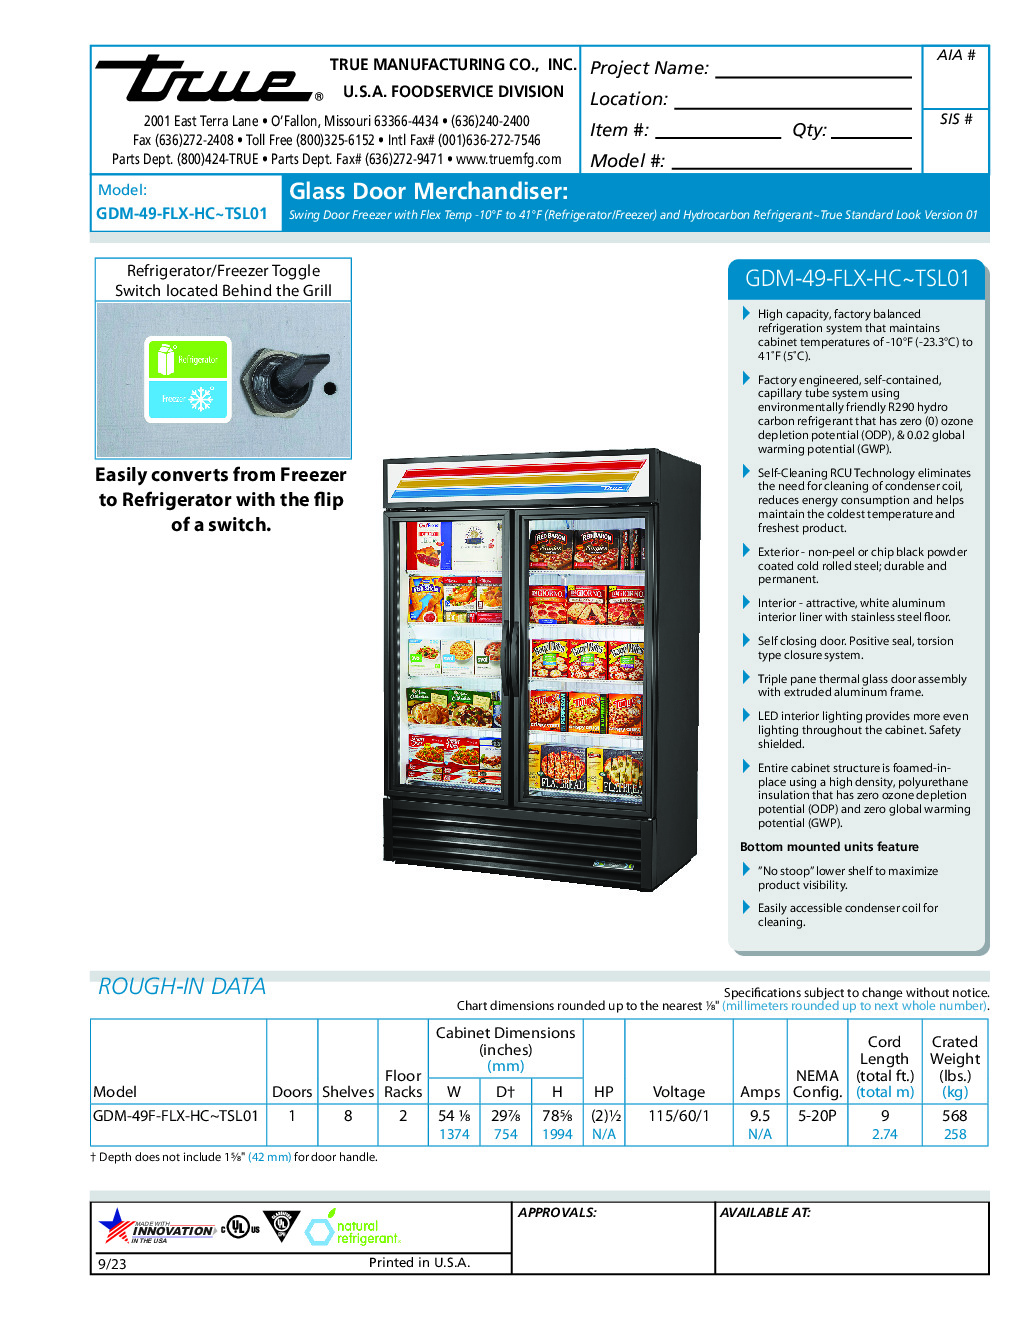 True GDM-49F-FLX-HC~TSL01 Convertible Refrigerator Freezer